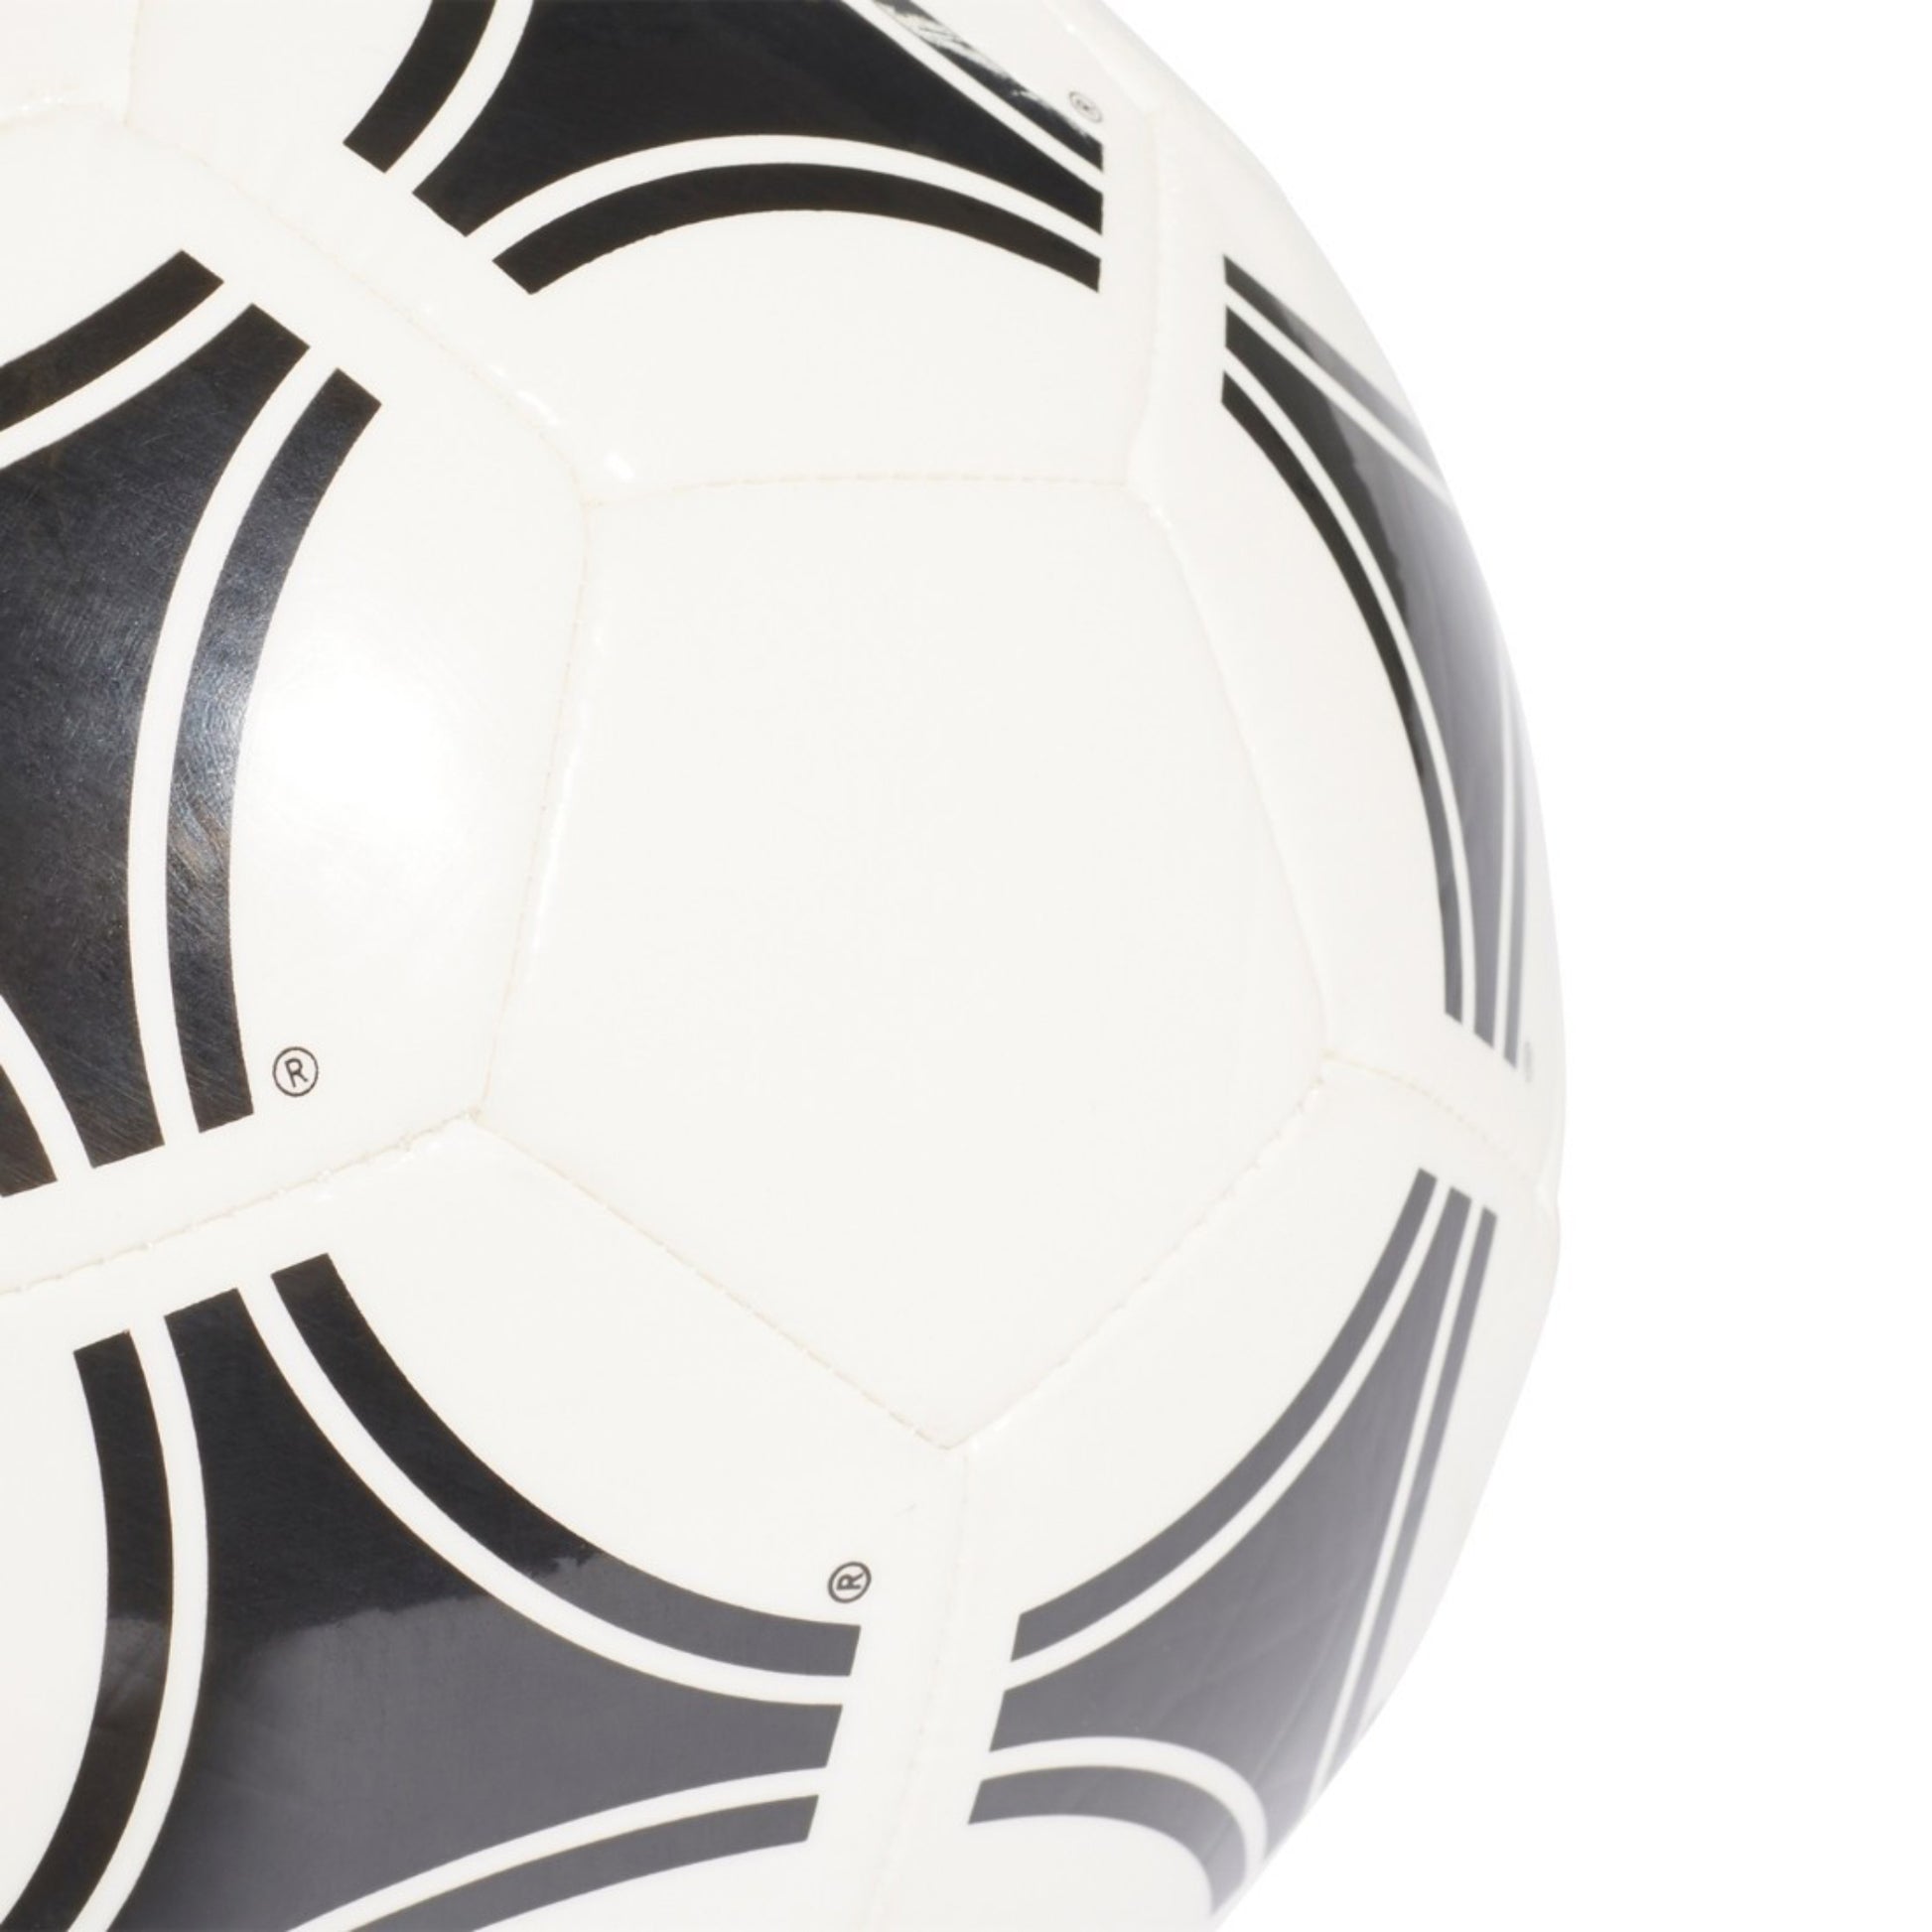 Tango Glider Soccer Ball | EvangelistaSports.com | Canada's Premiere Soccer Store